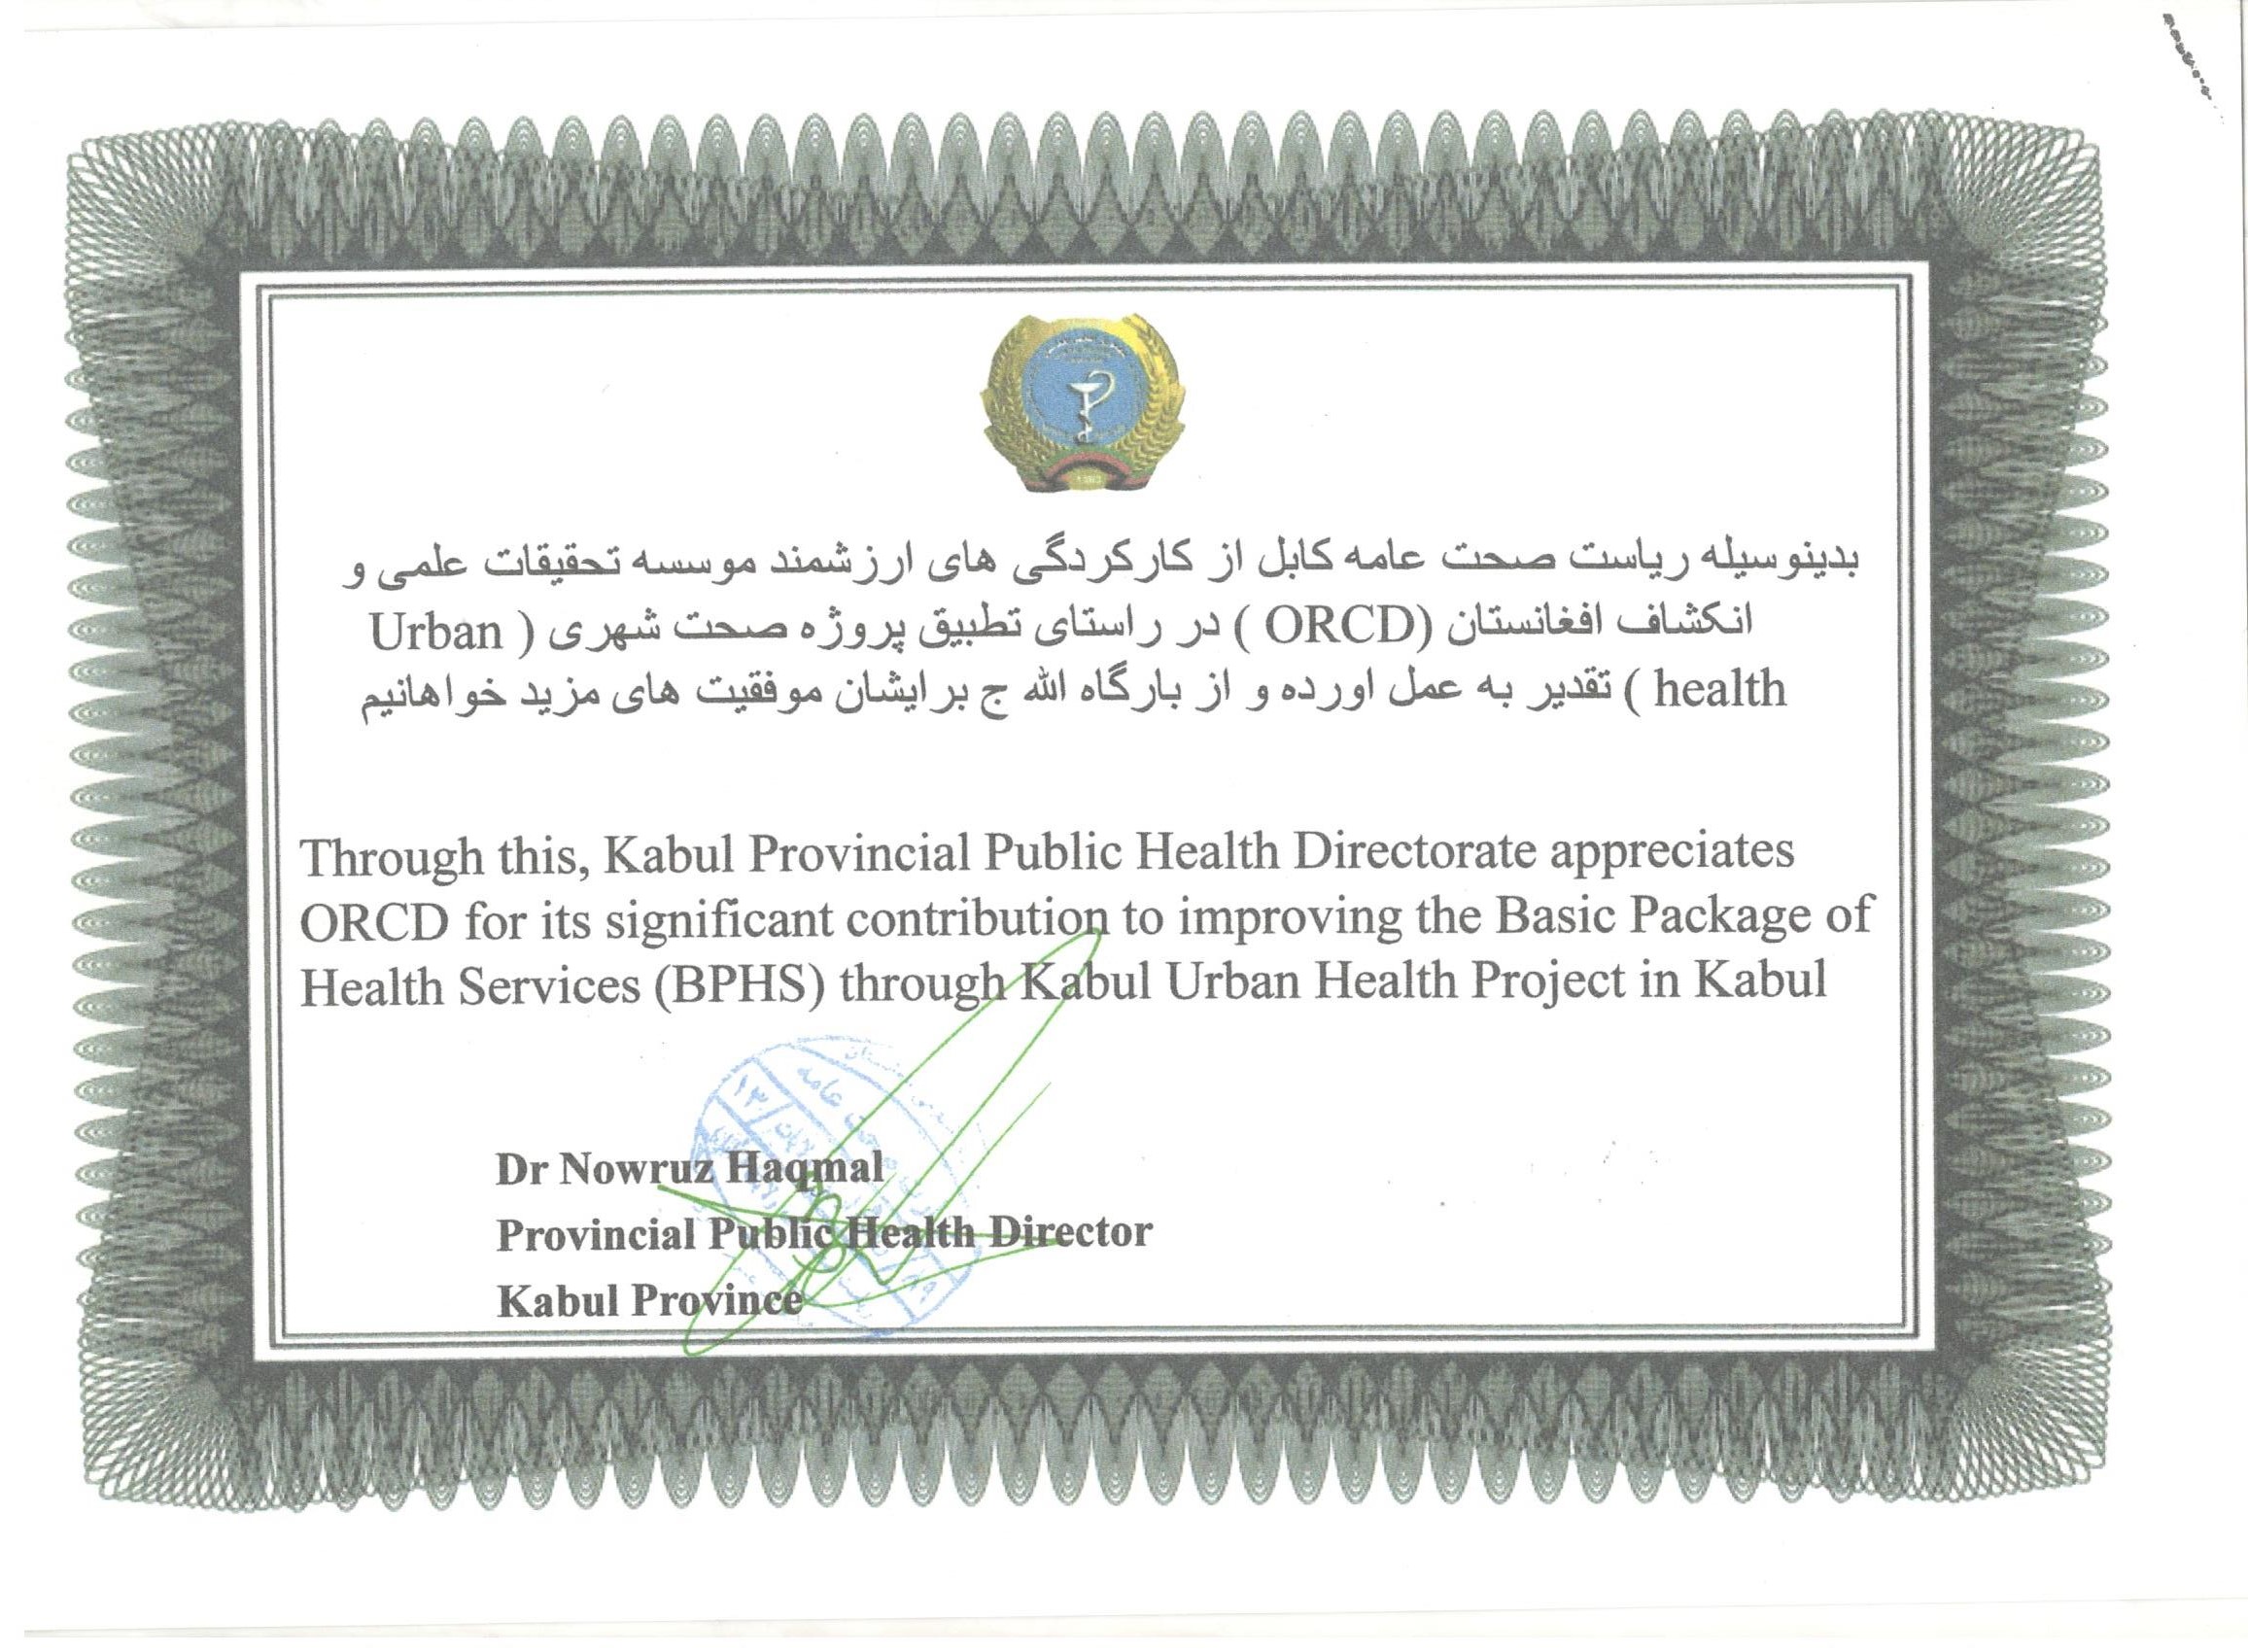 PPHD Kabul Appreciation Letter